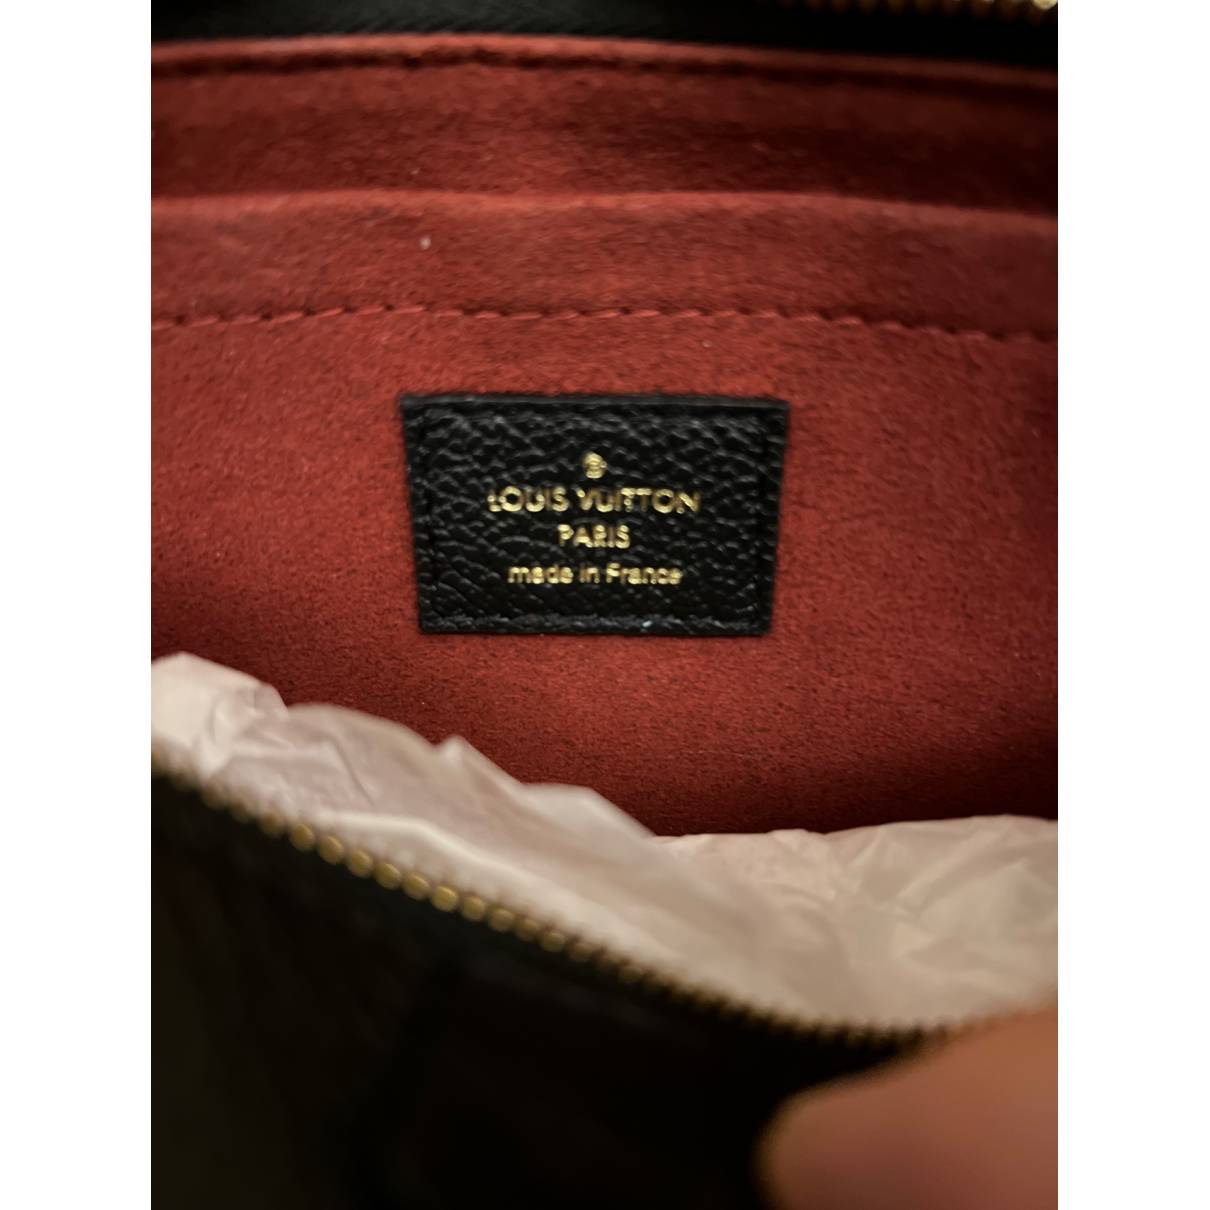 [Sold] LV Louis Vuitton Hold Me Calfskin Hand Bag / Cross Body